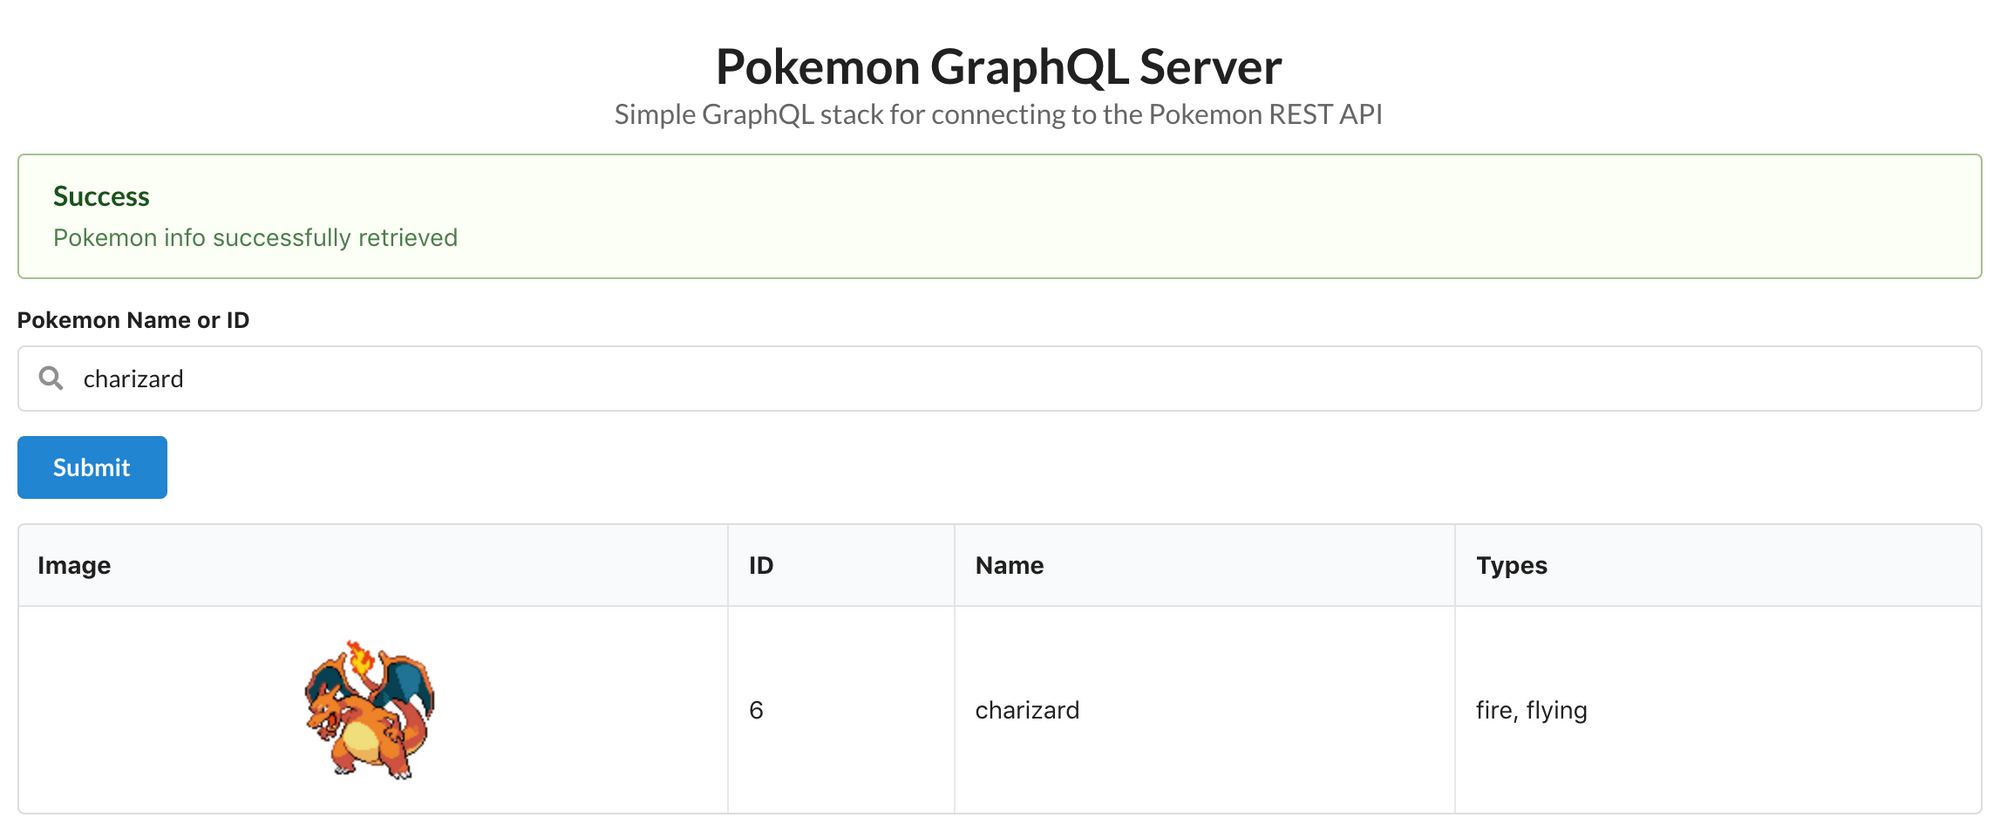 Pokémon GraphQL Server